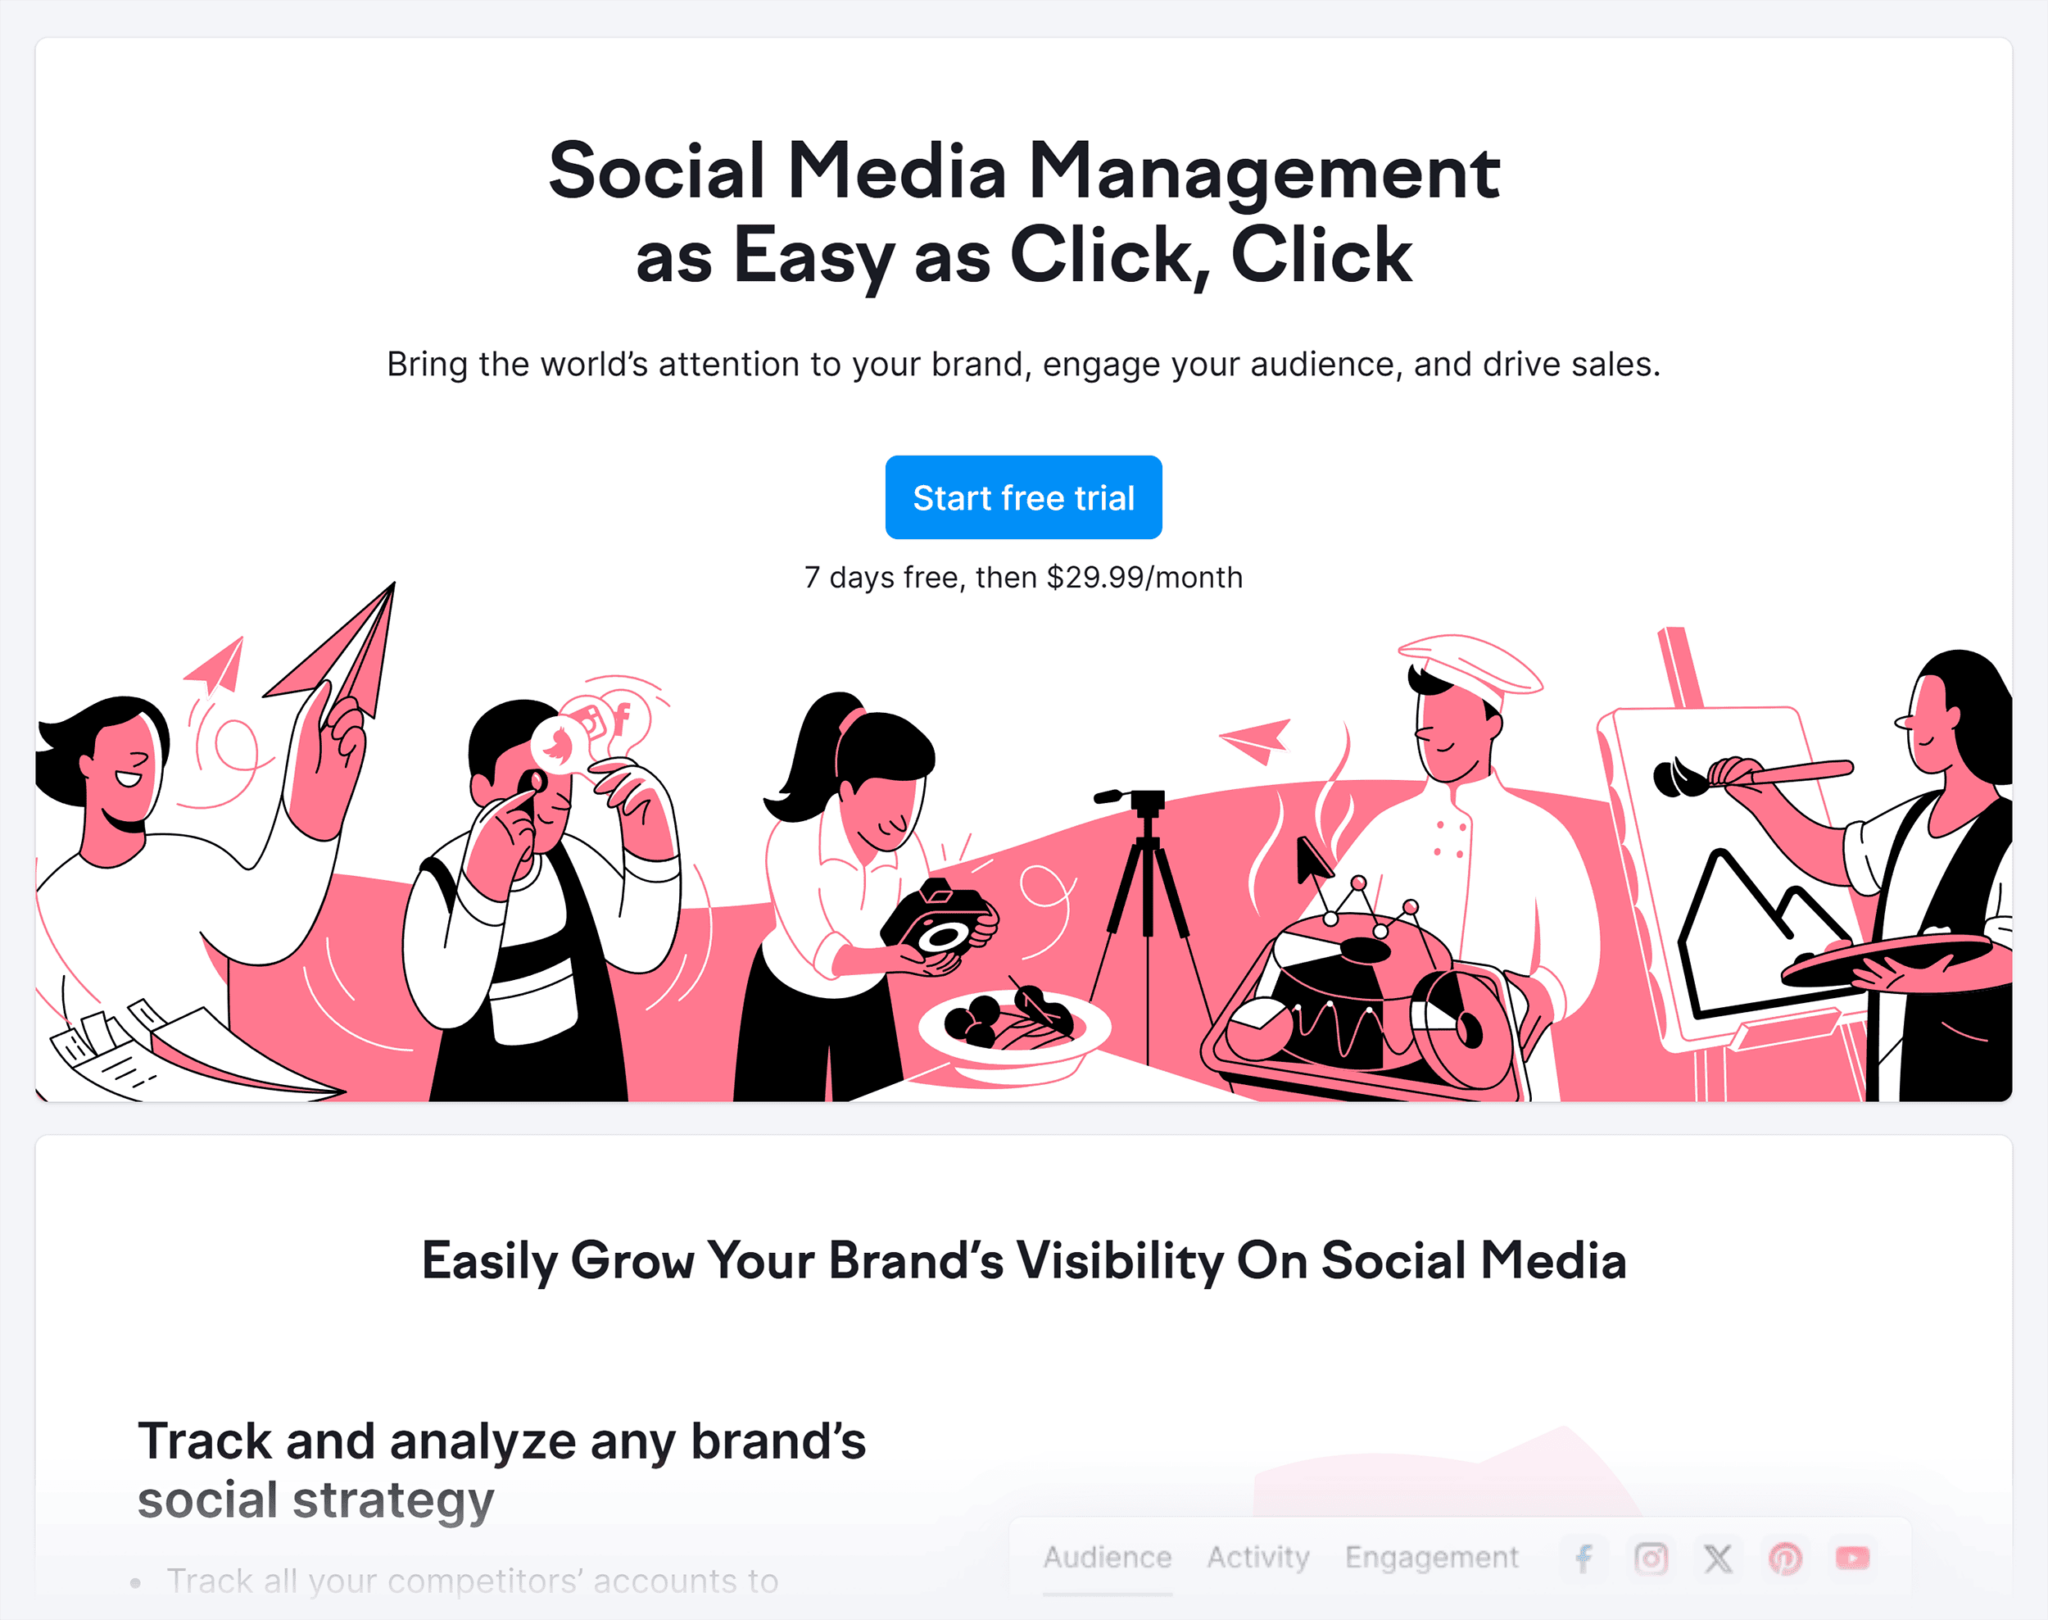 semrush-social-tools 29 Top Digital Marketing Tools for Every Budget